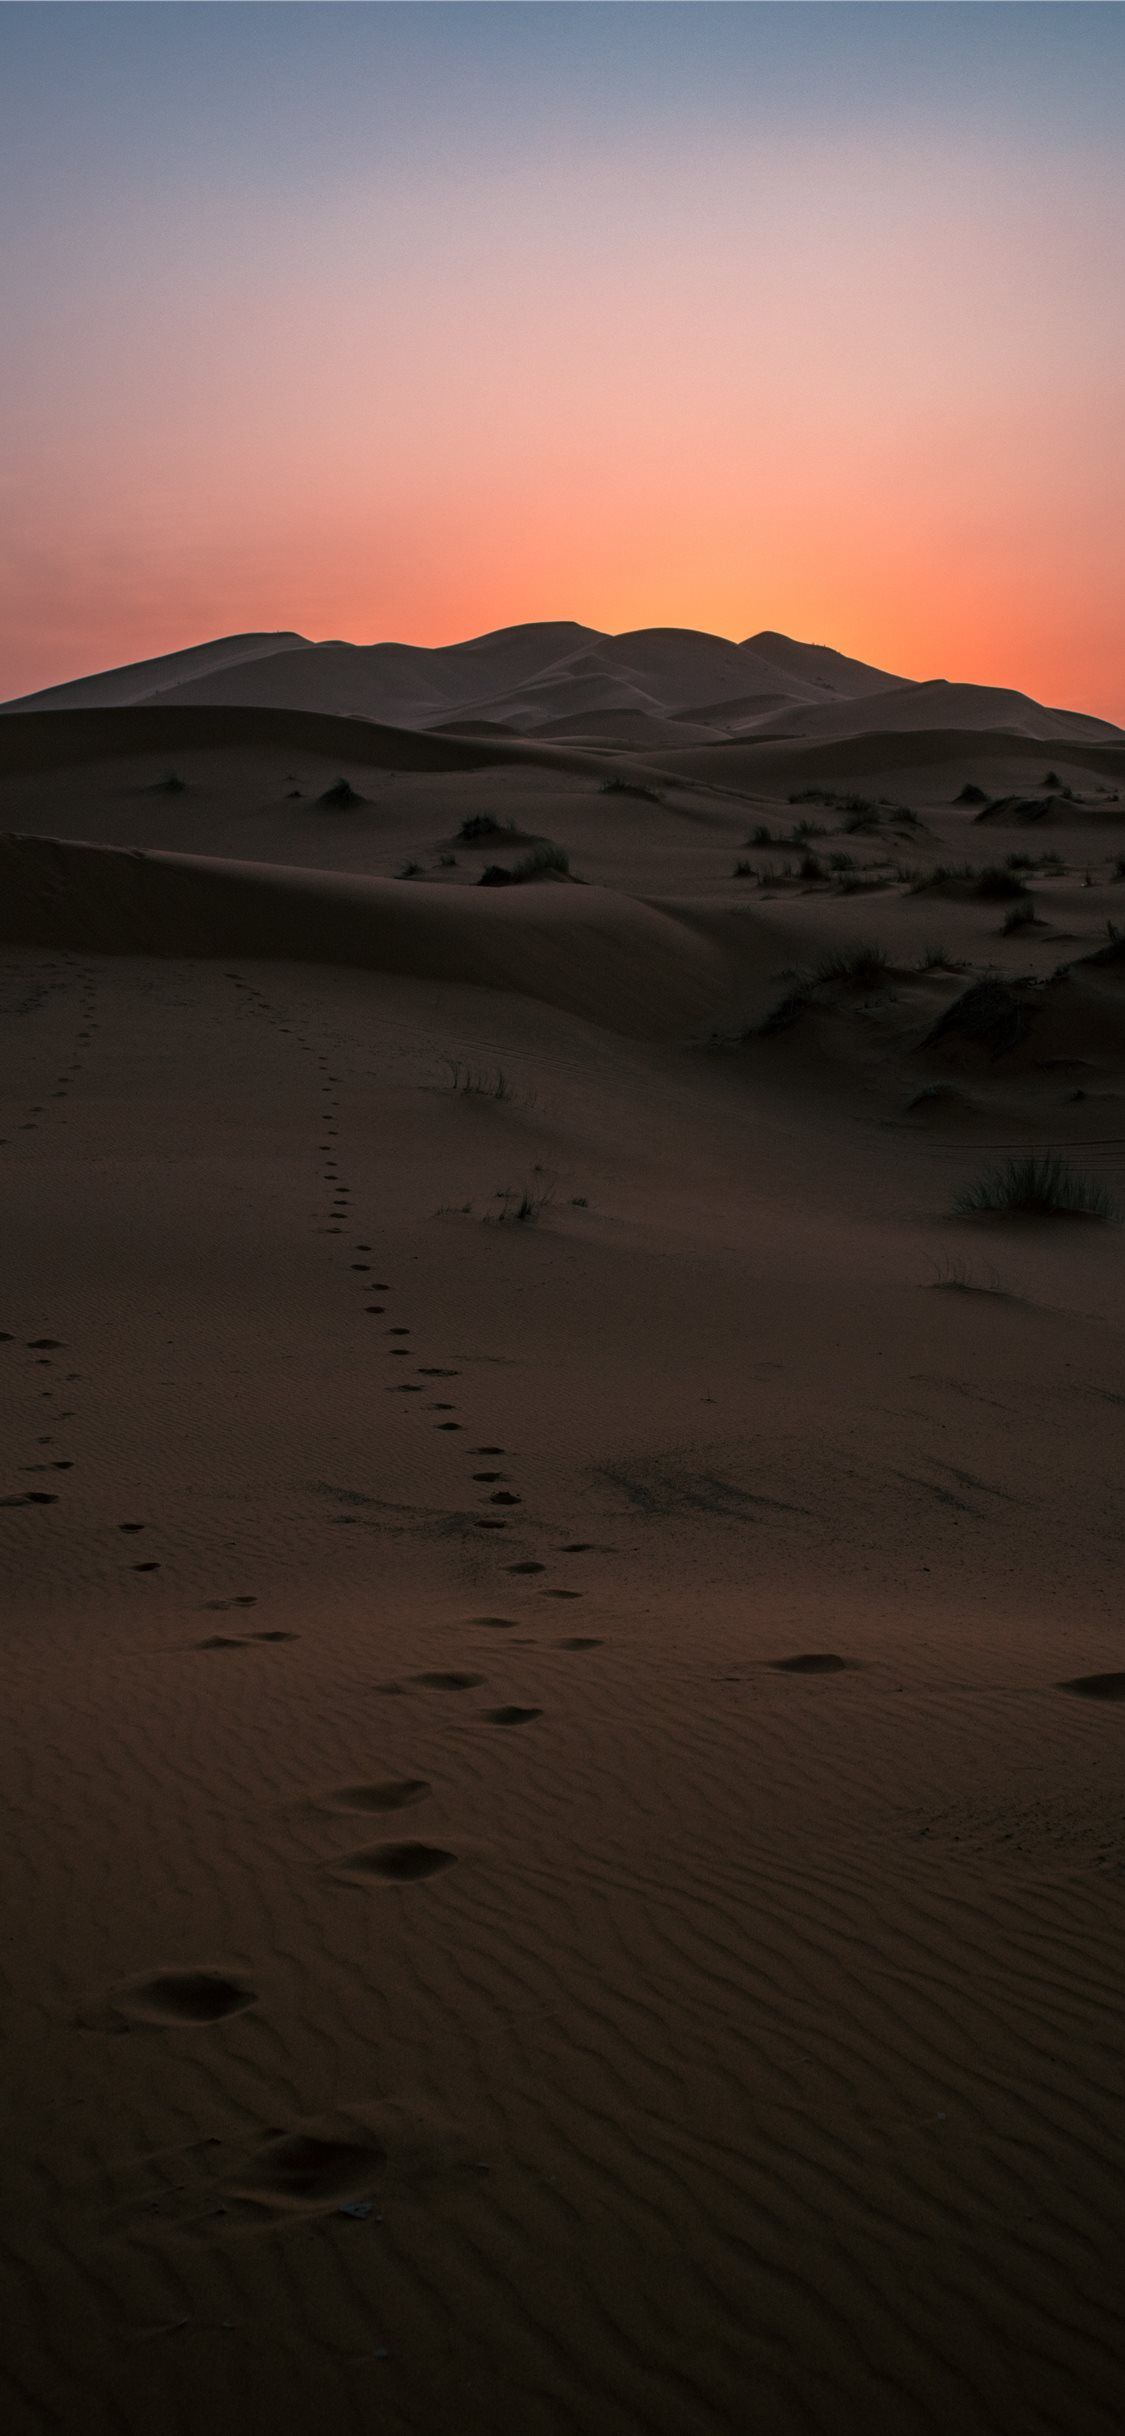 Desert Sunset iPhone X Wallpaper Free Download